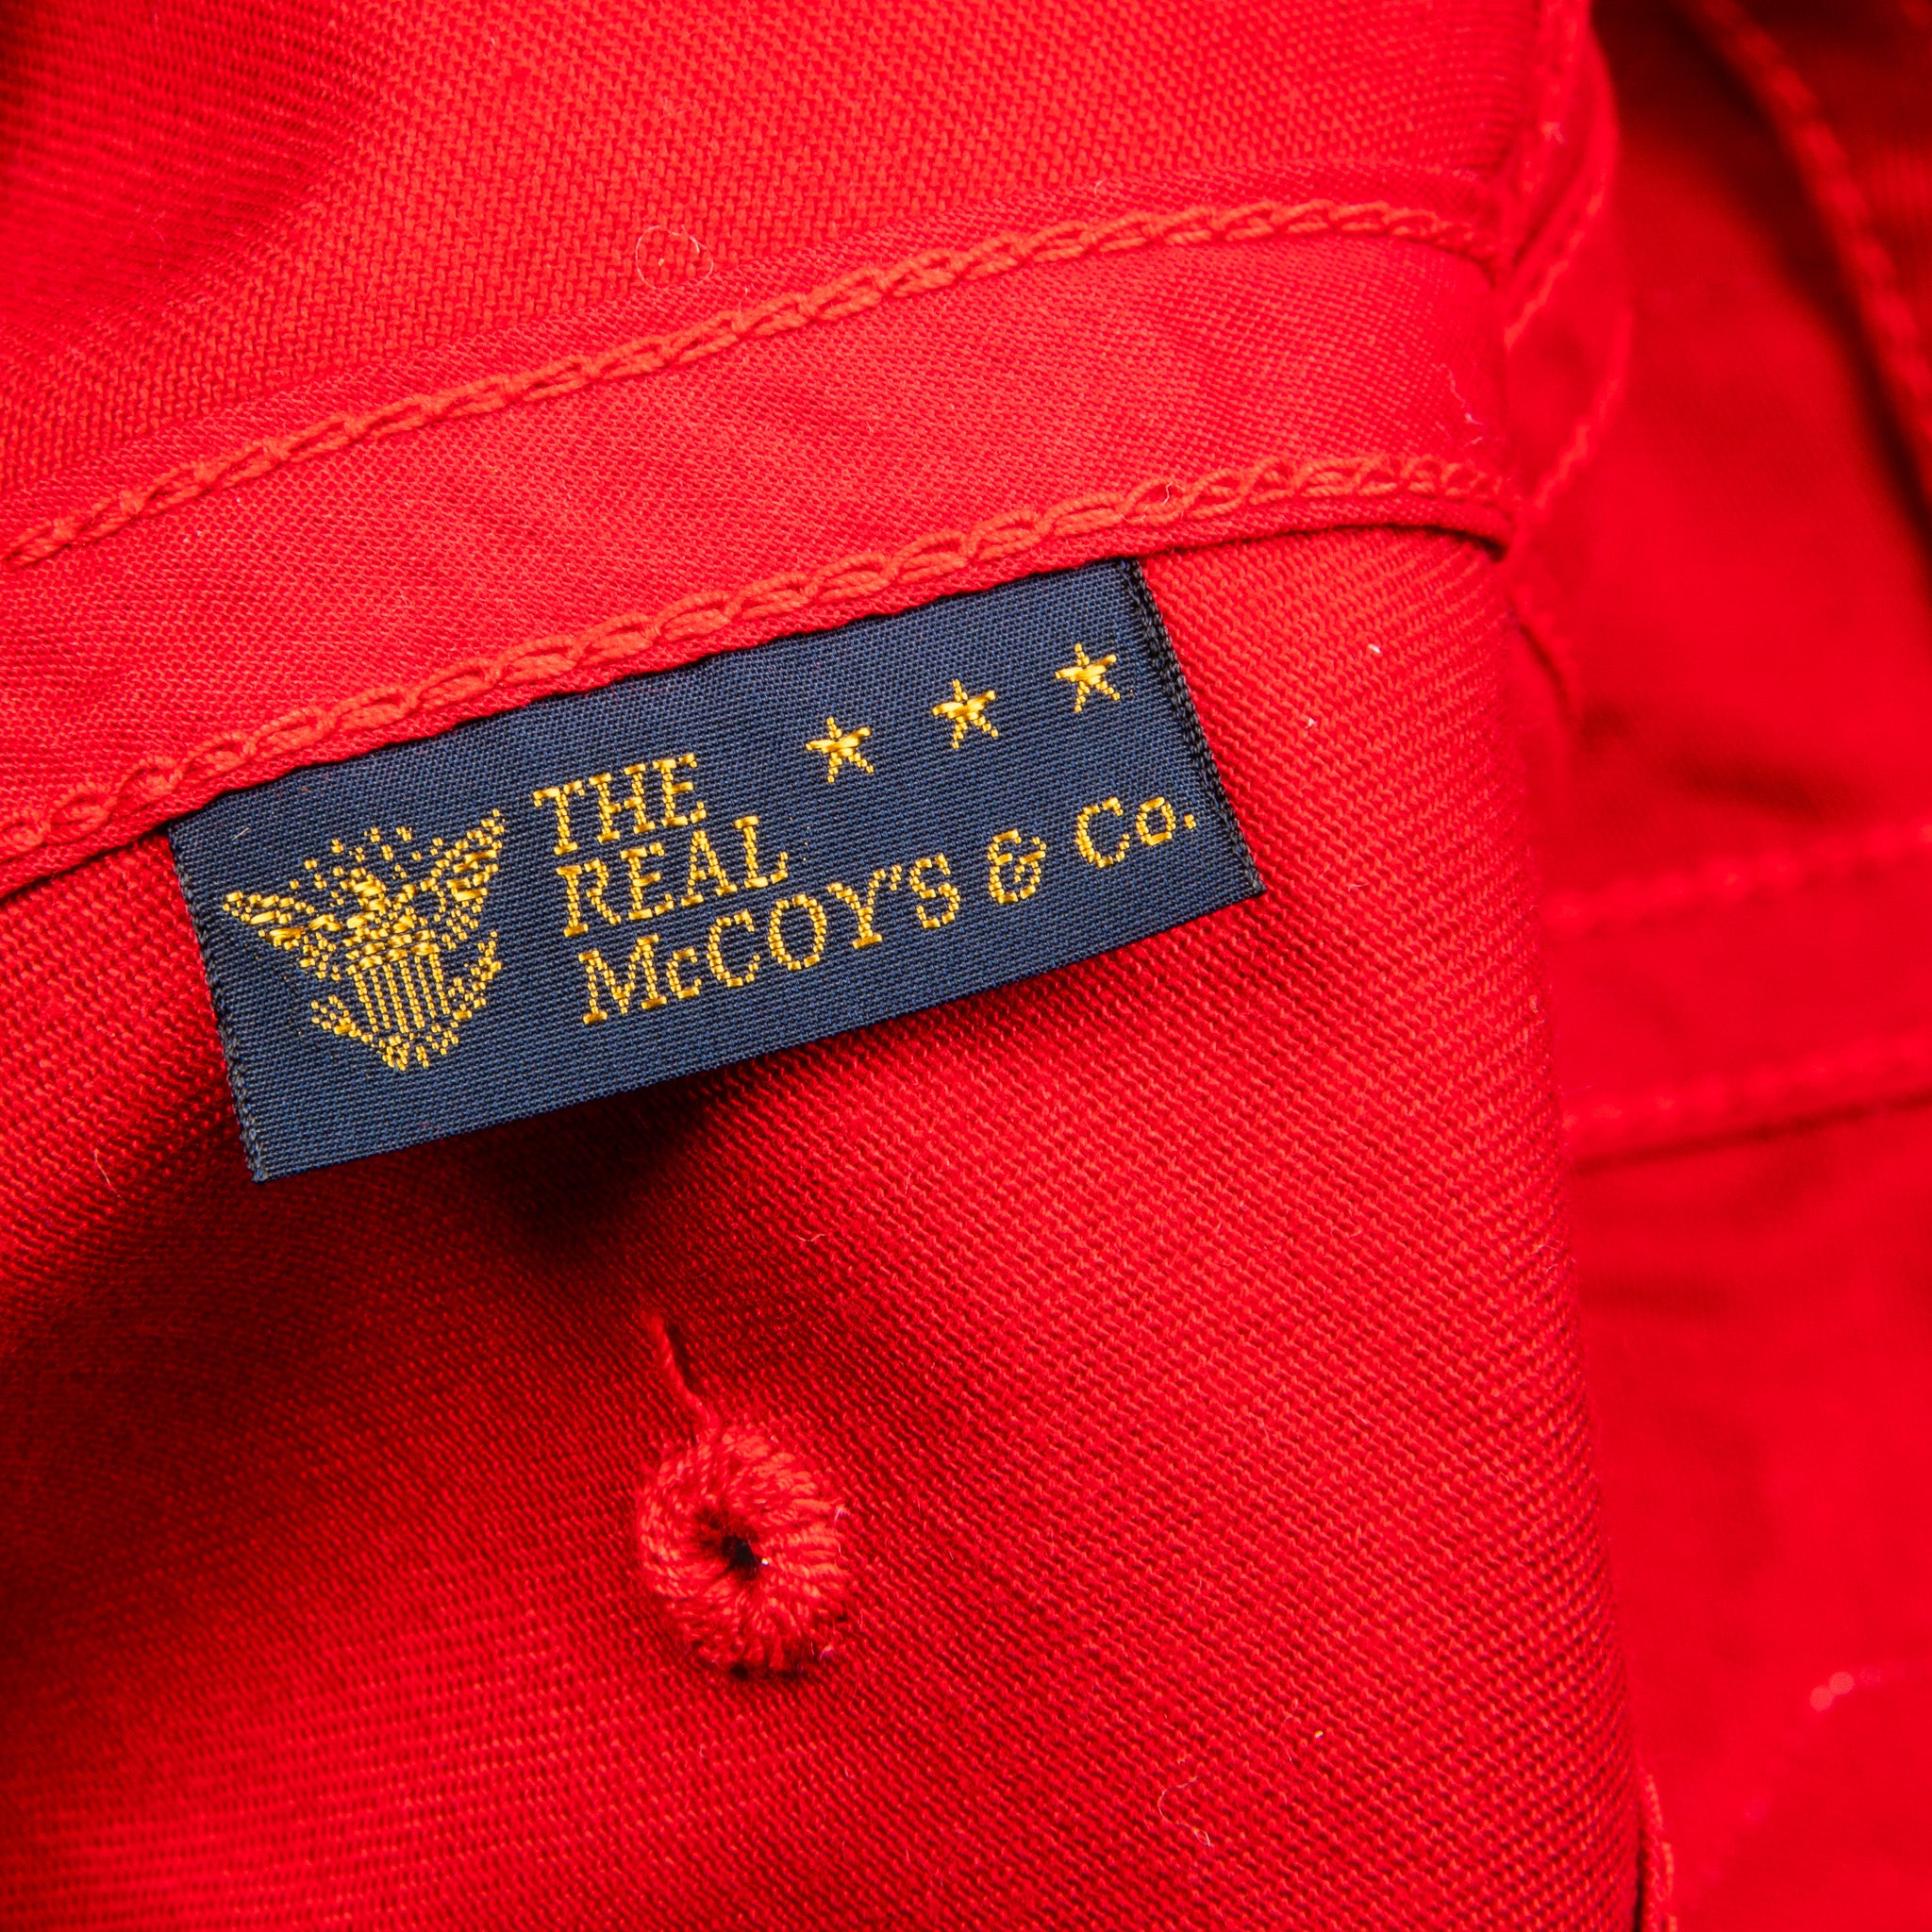 The Real McCoy&#39;s Logo Baseball Cap Red